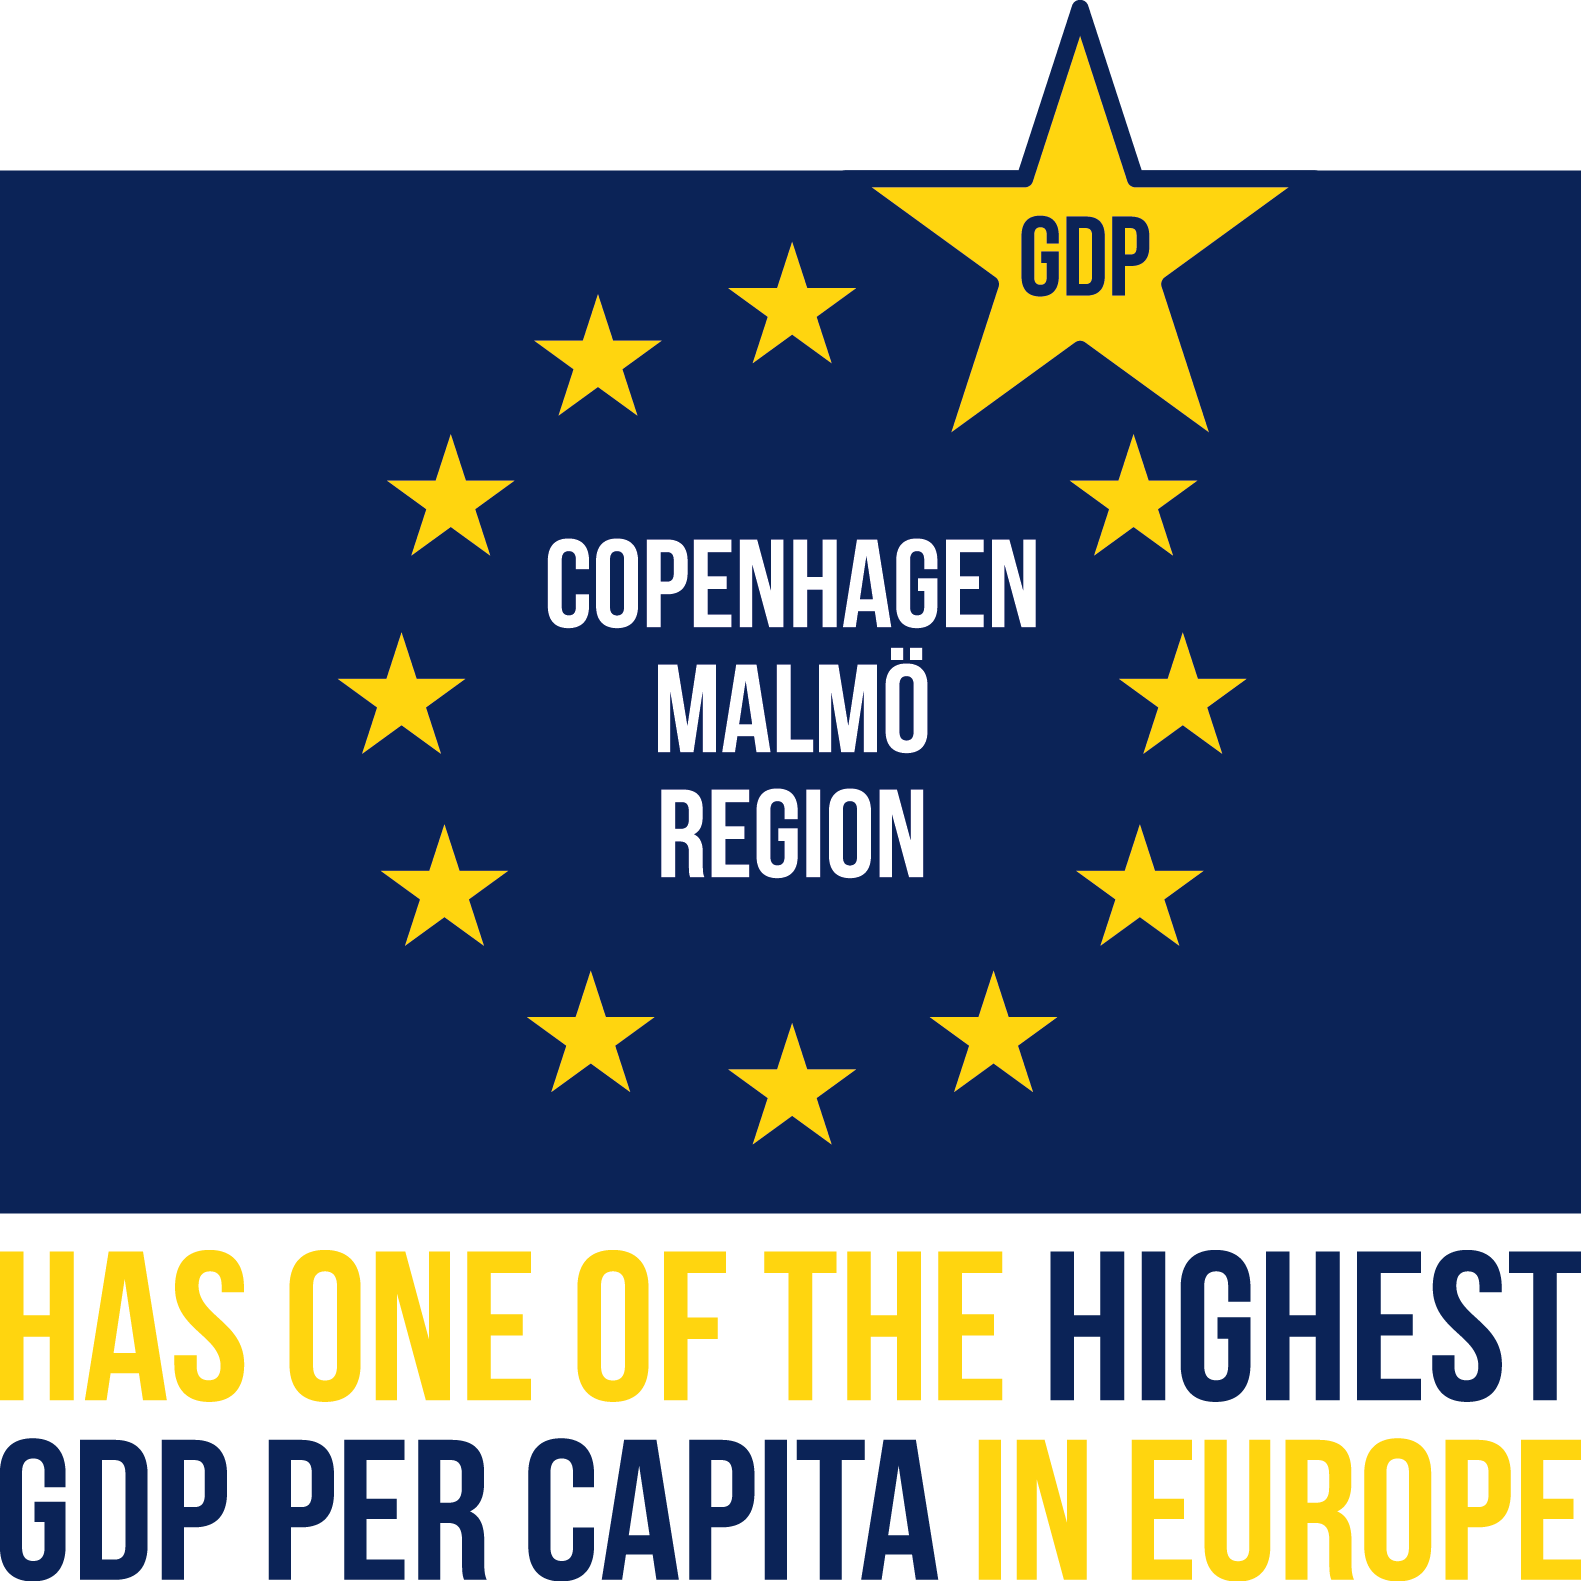 The Greater Copenhagen Region